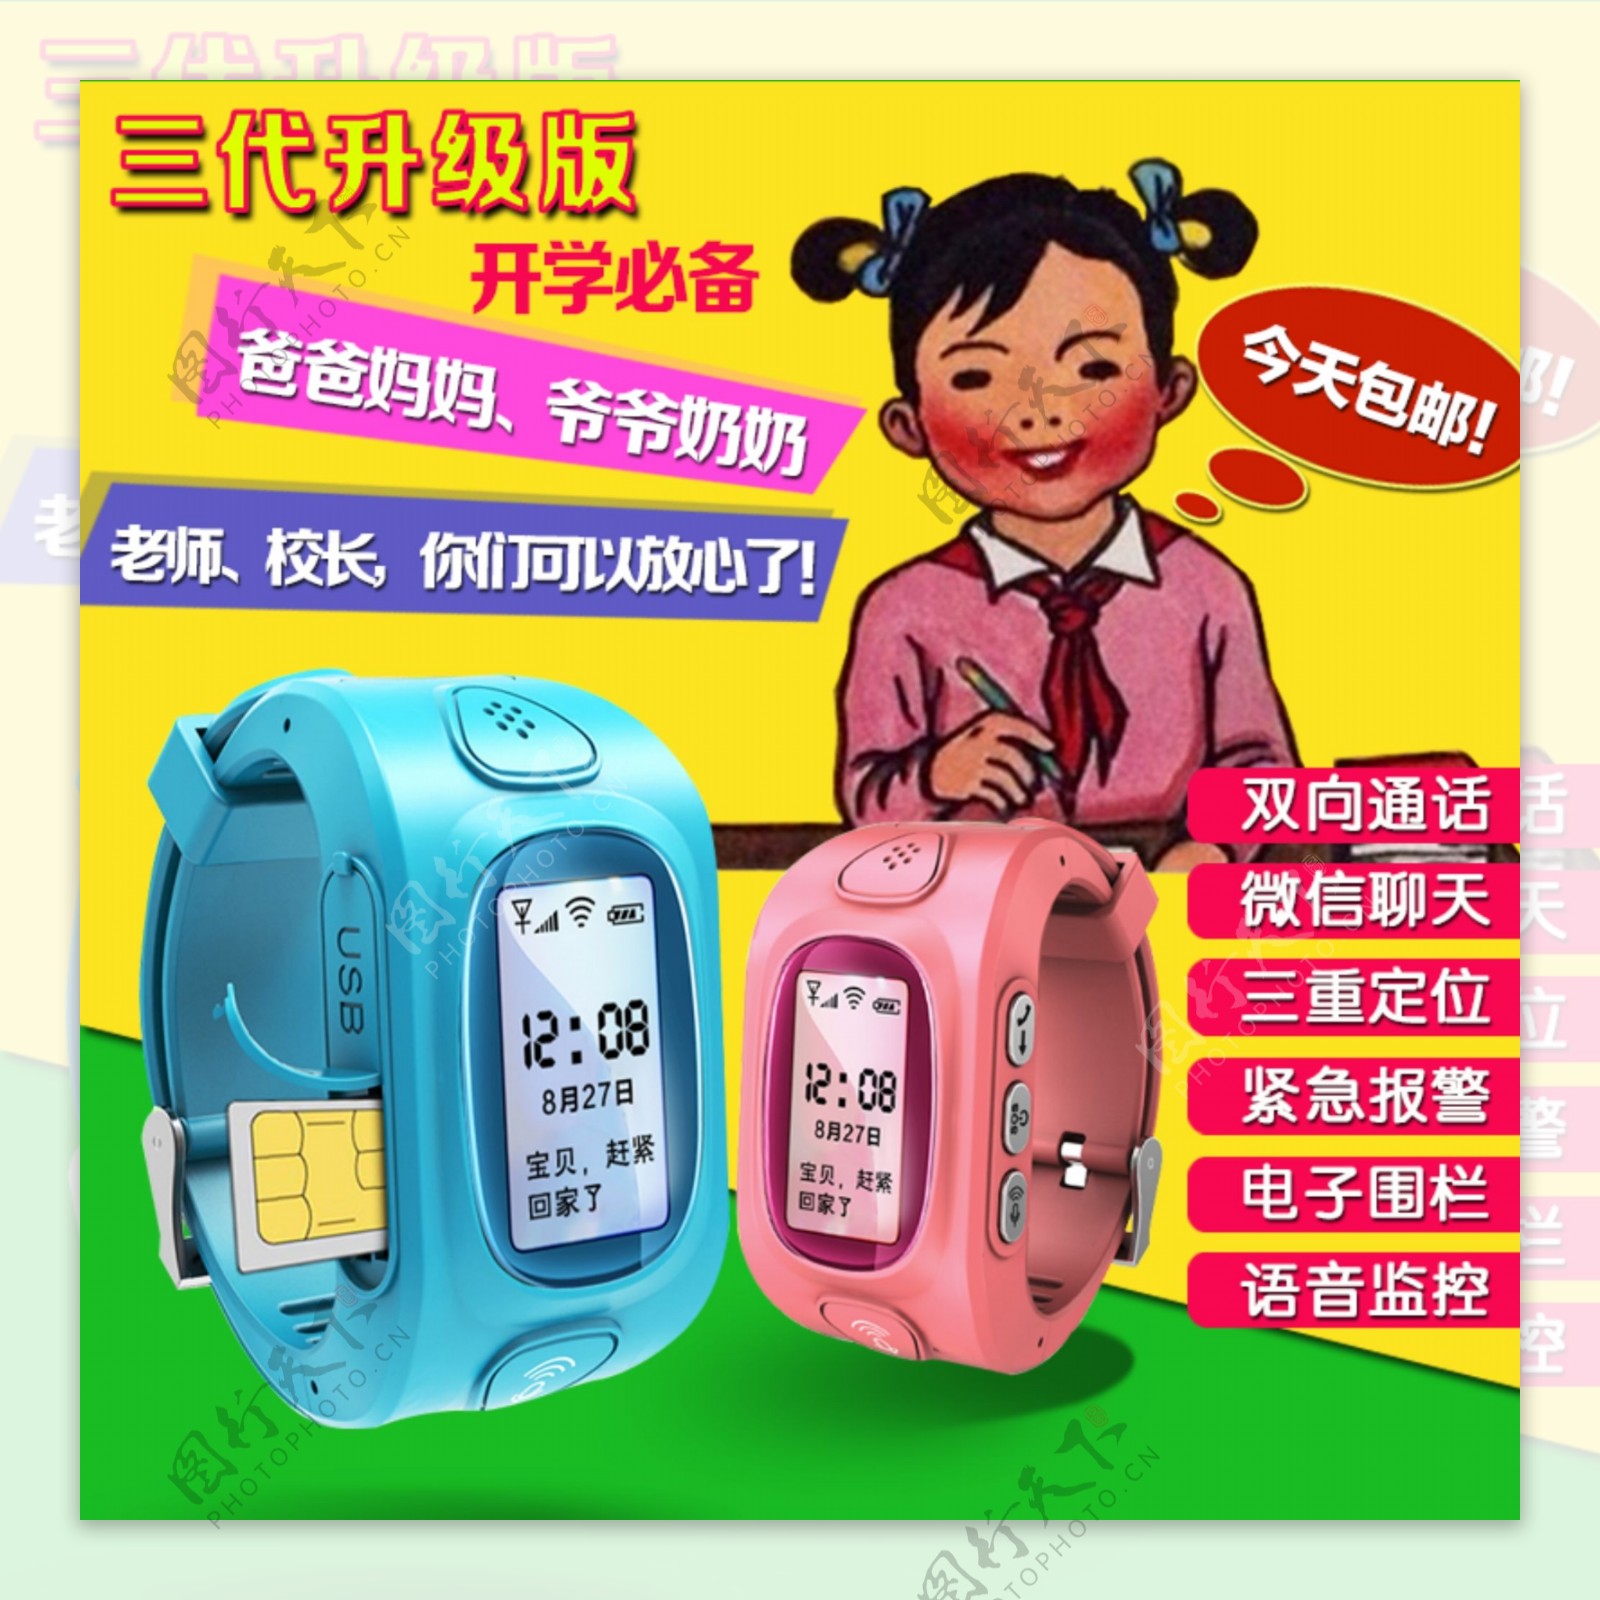 gps儿童定位器手表主图免费下载